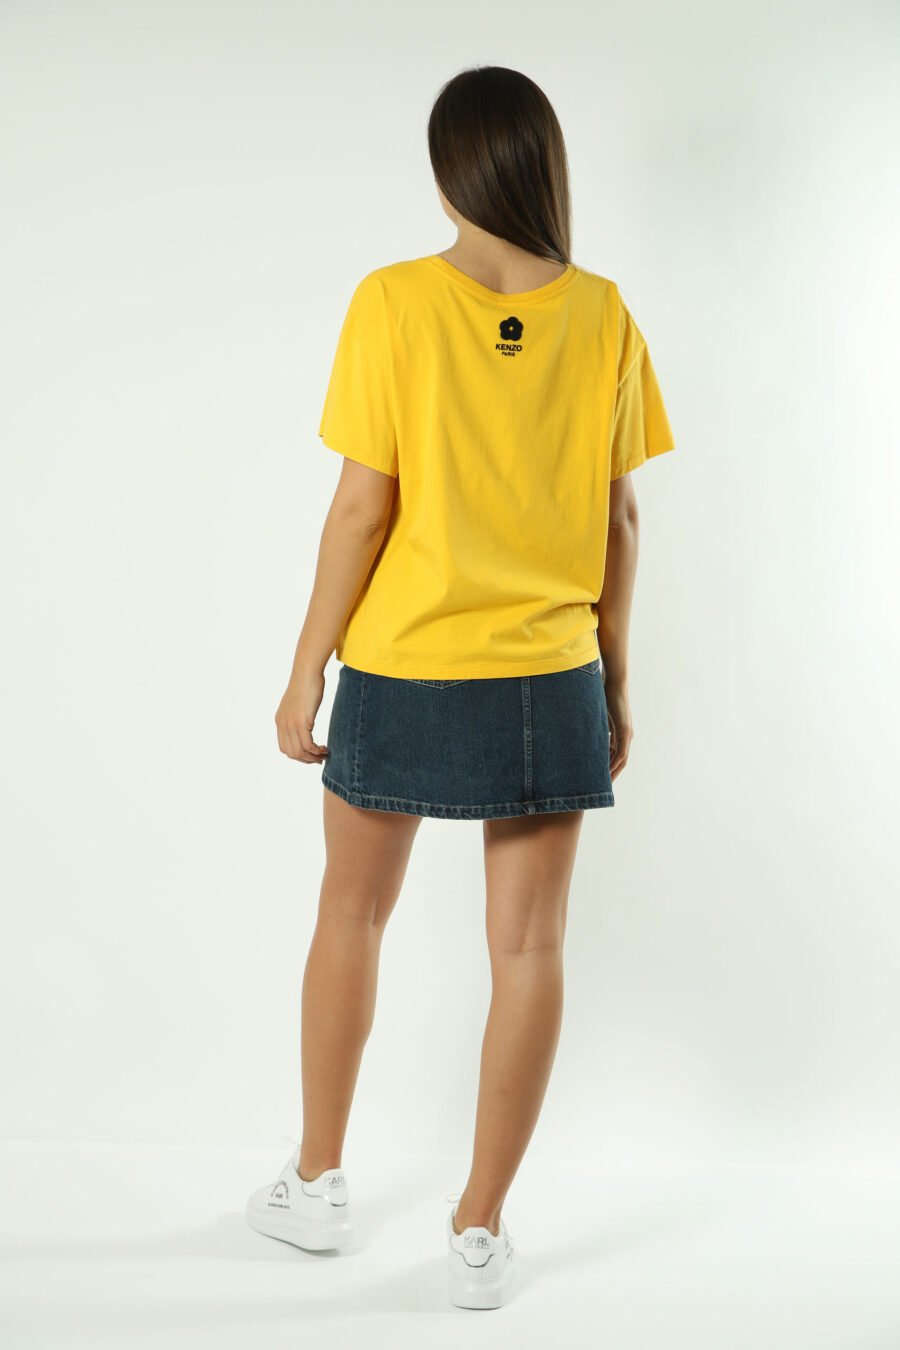 Yellow T-shirt with elephant maxilogo - Photos 1314